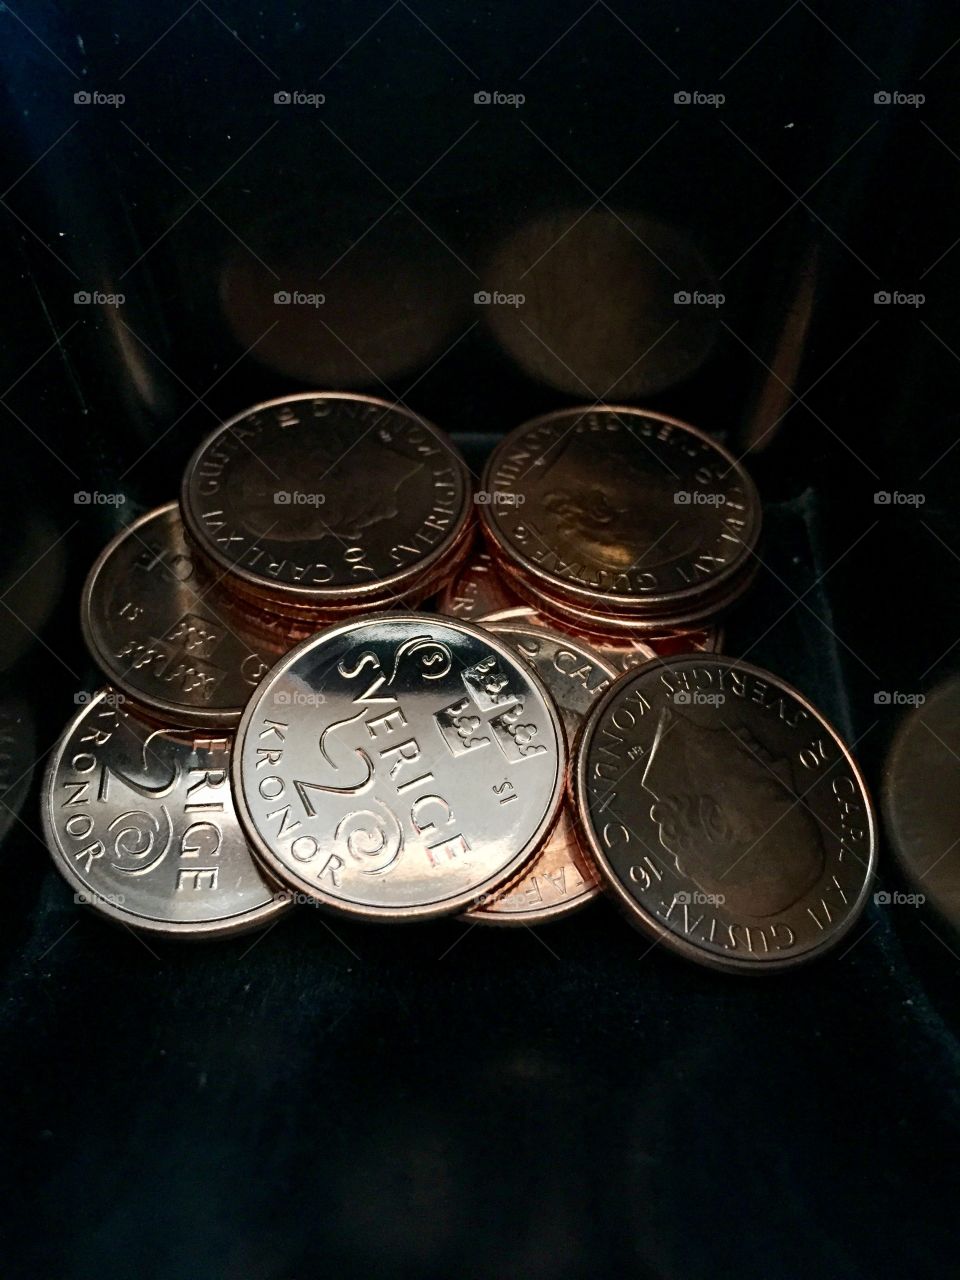 Swedish shiny copper coins 